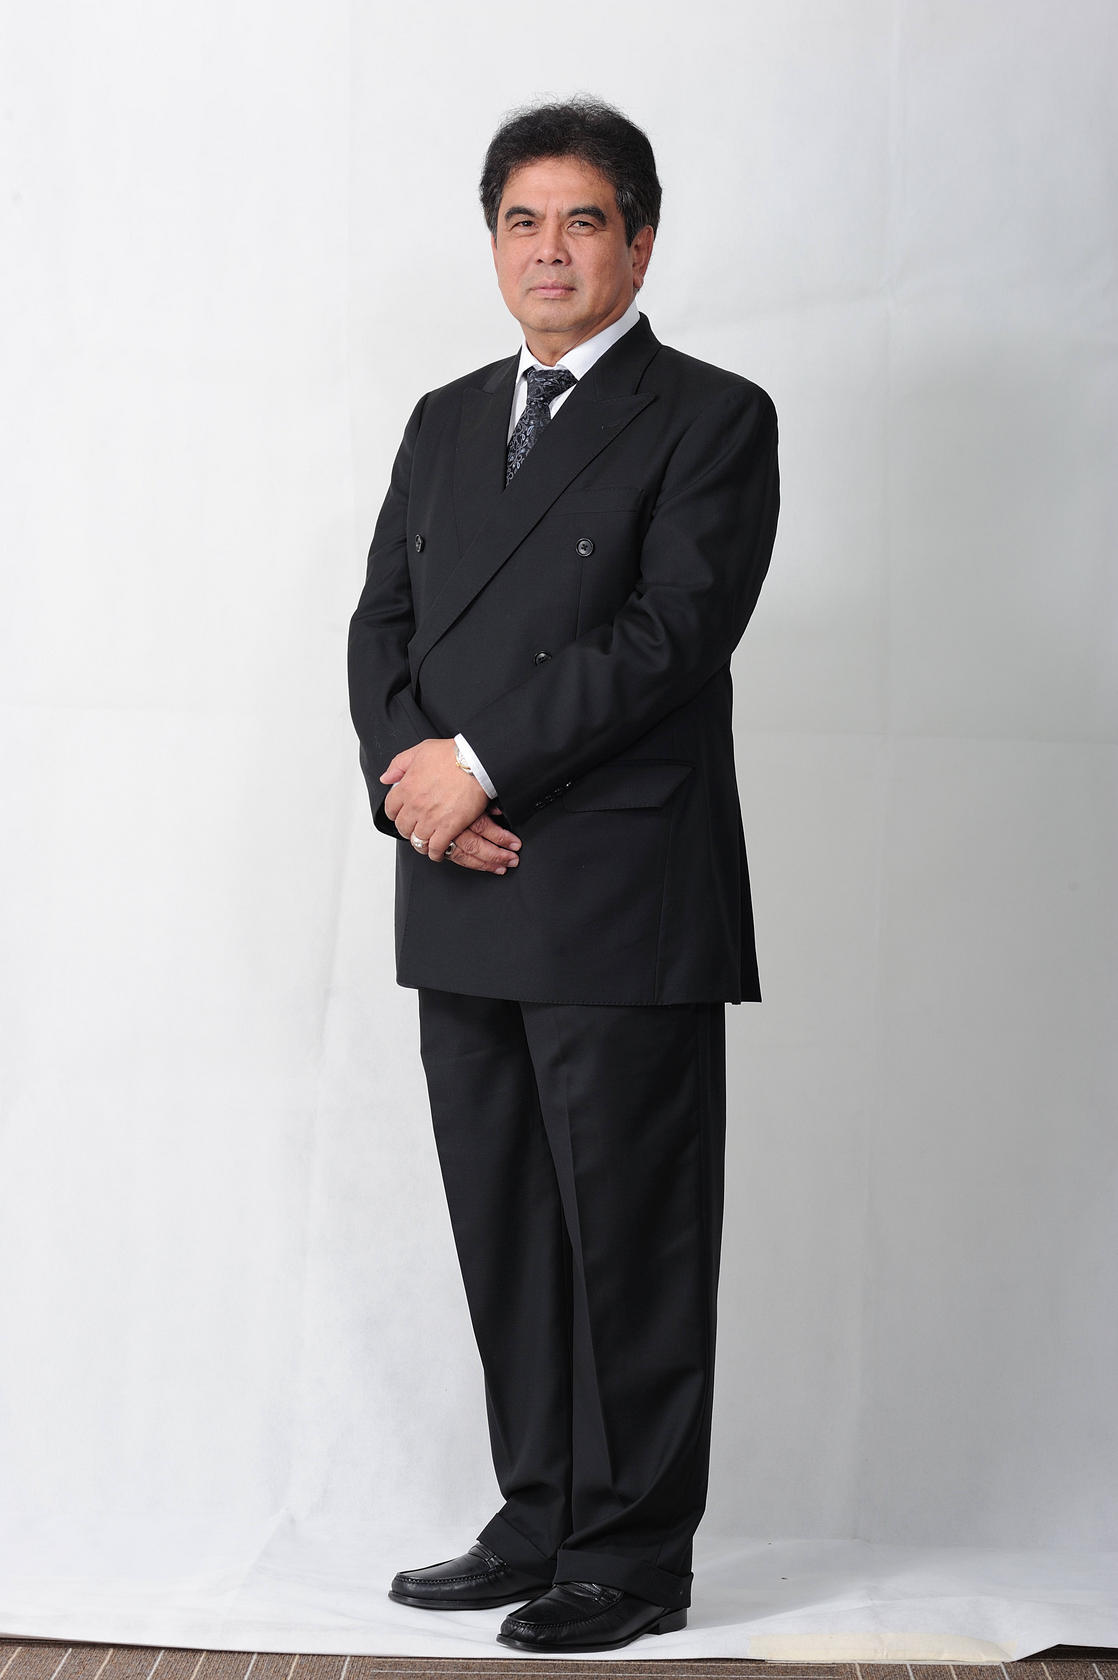 Abdul Hak Mohamad Amin, managing director